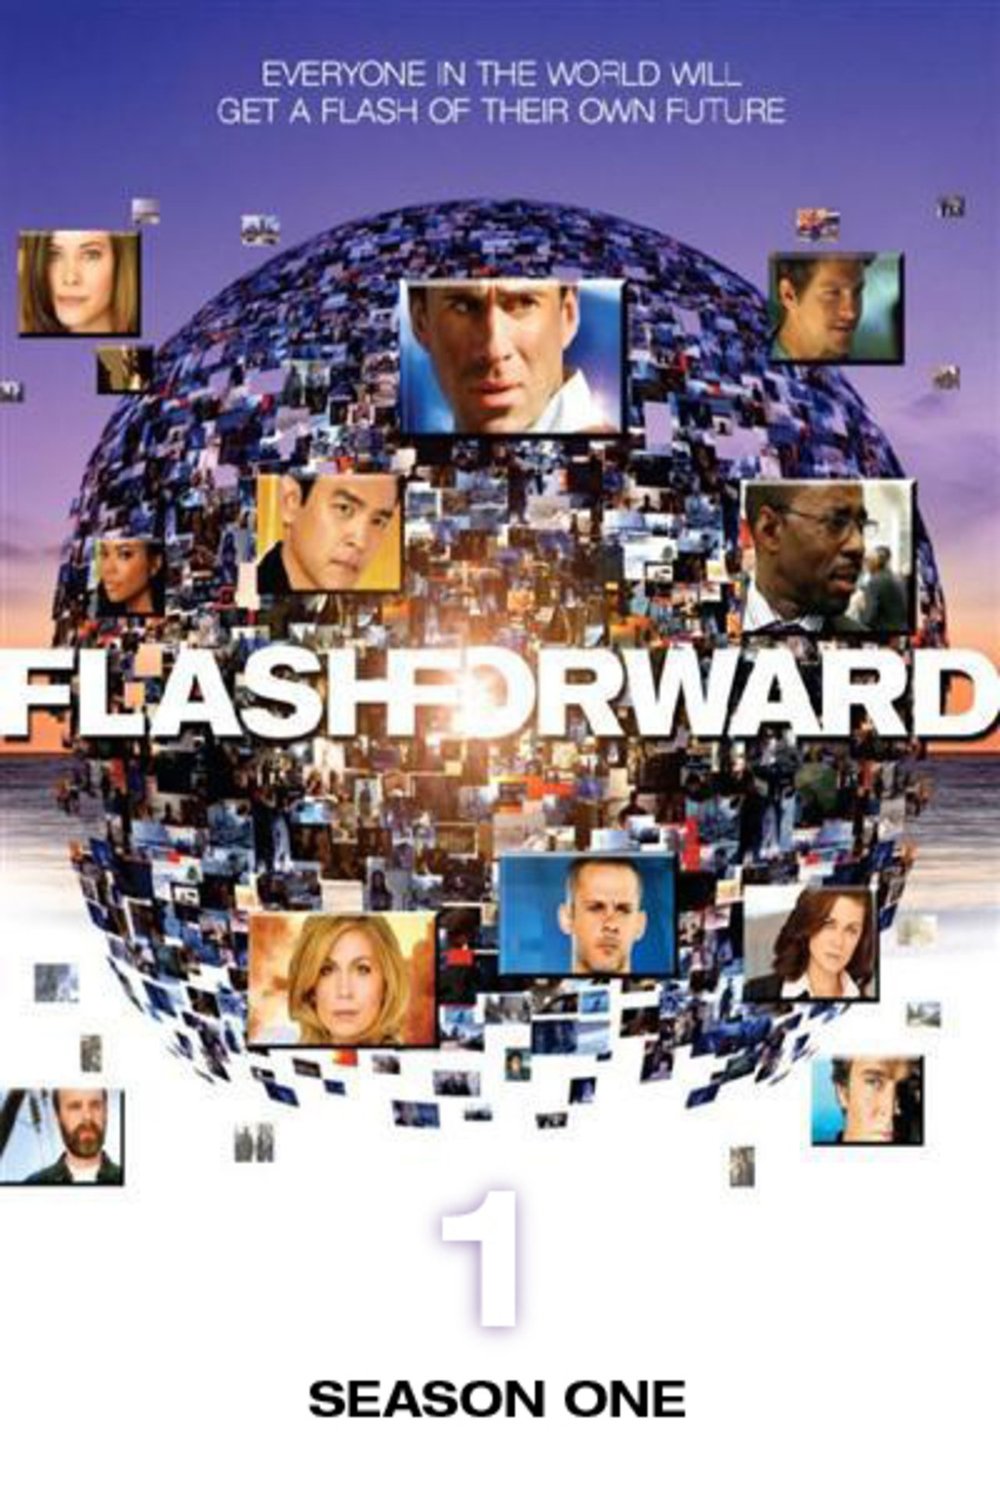 Poster of the movie Flashforward